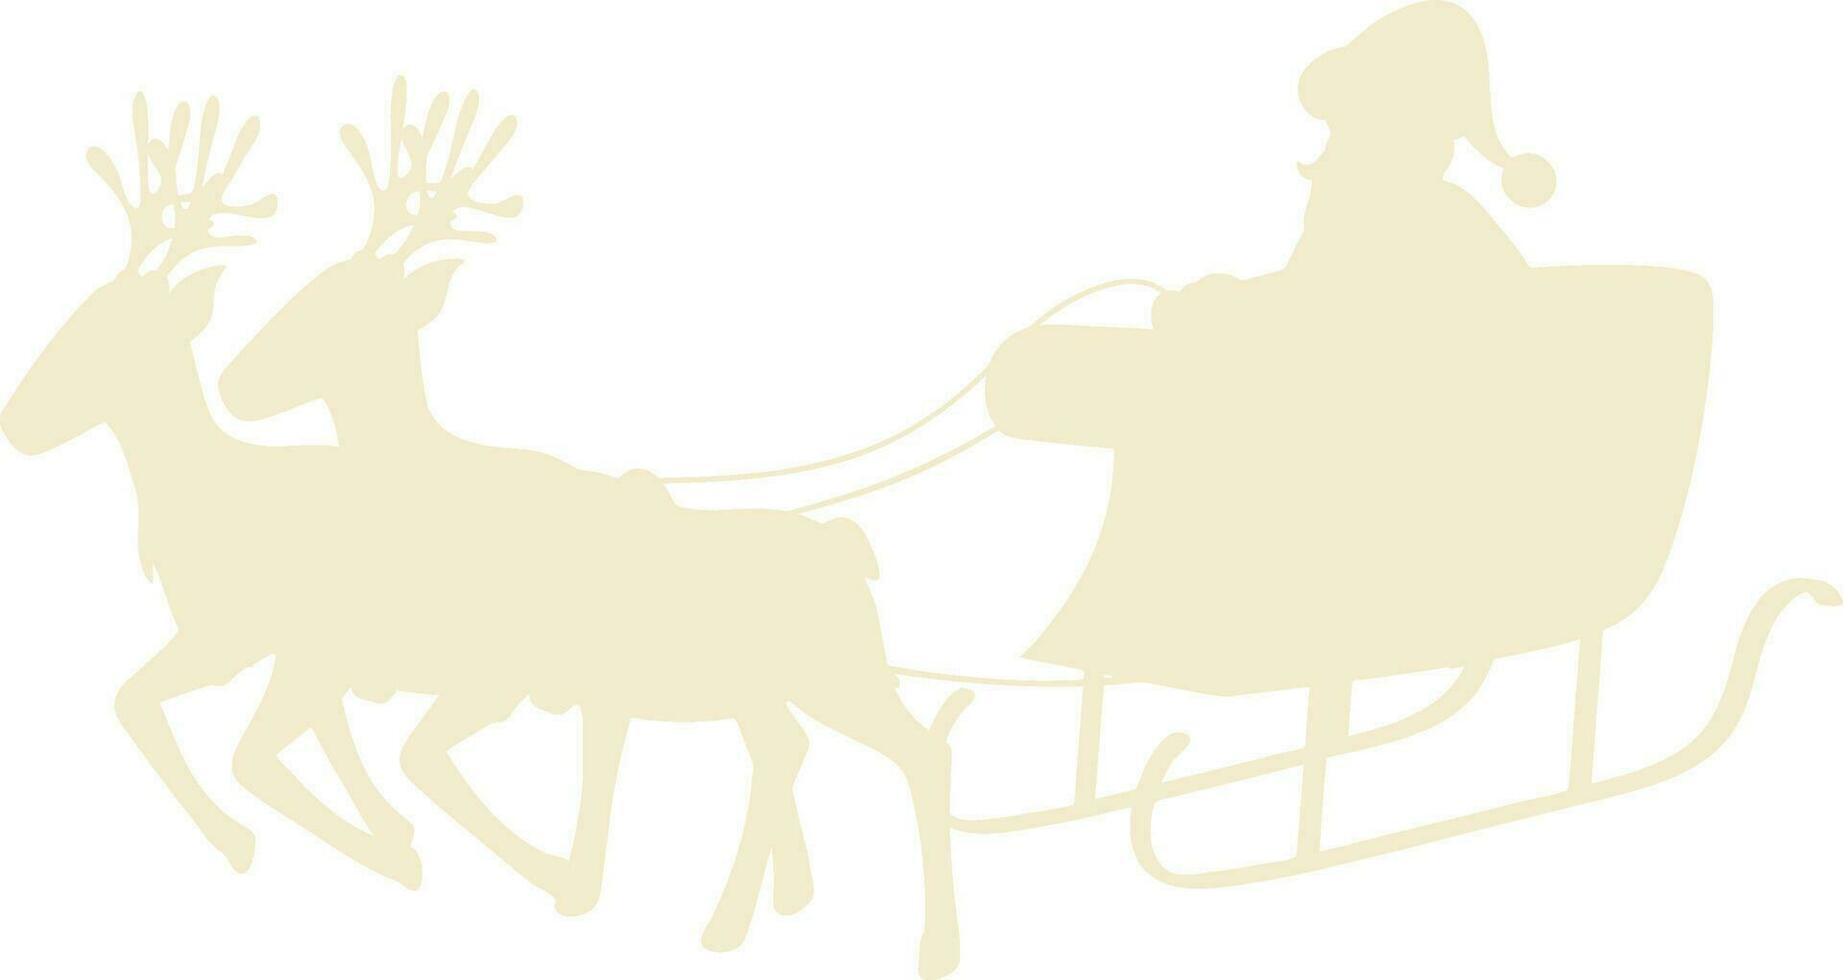 Santa claus with reindeer sleigh. vector